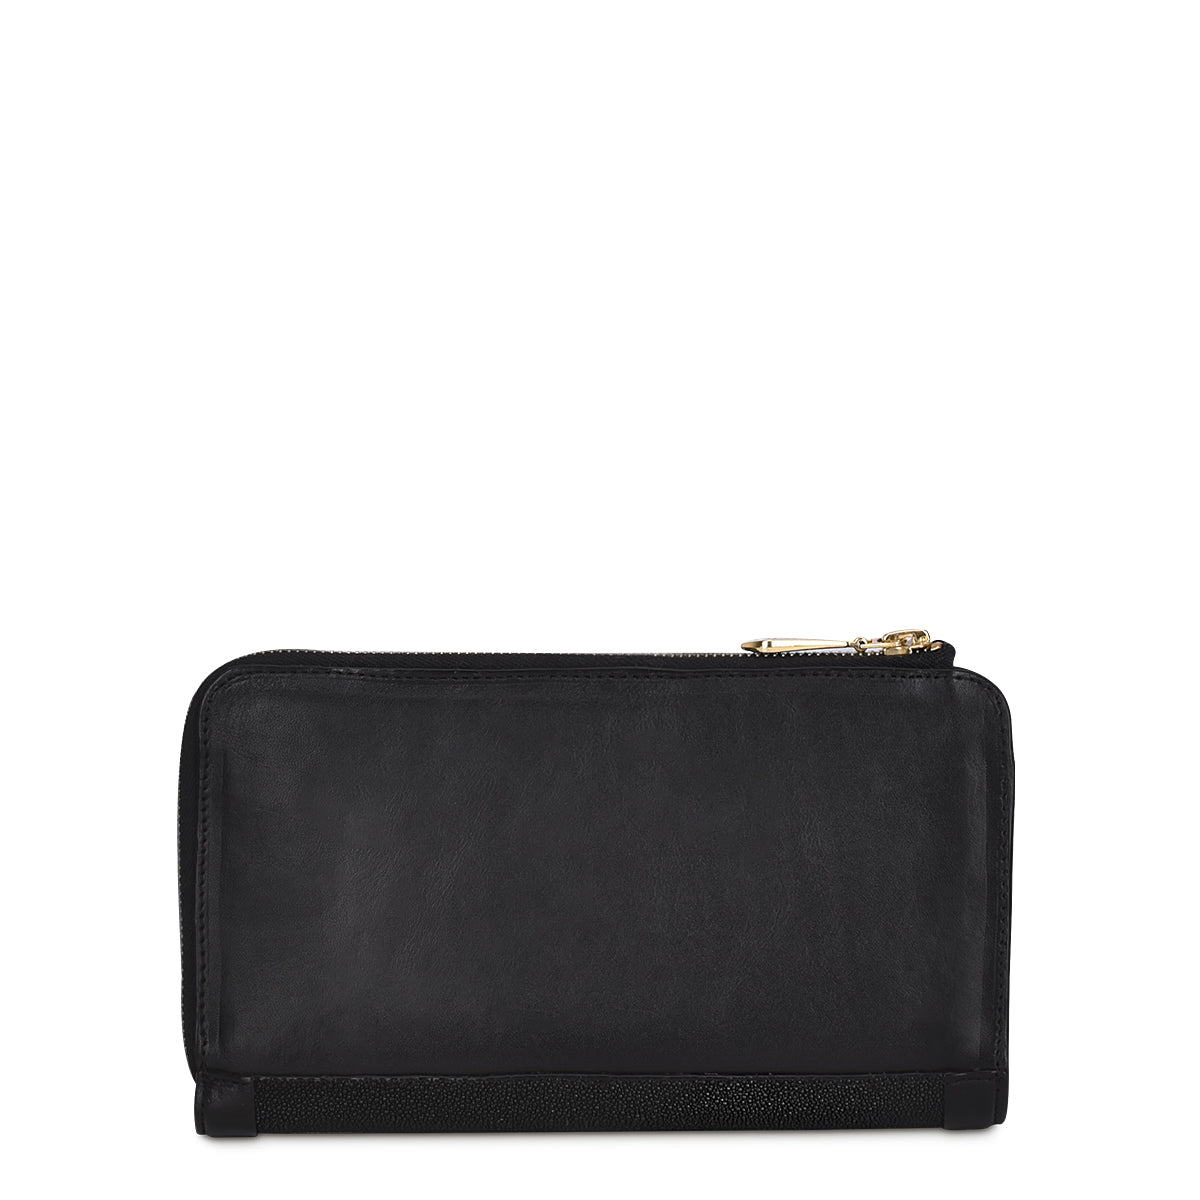 Black leather bifold wallet,  stingray leather.